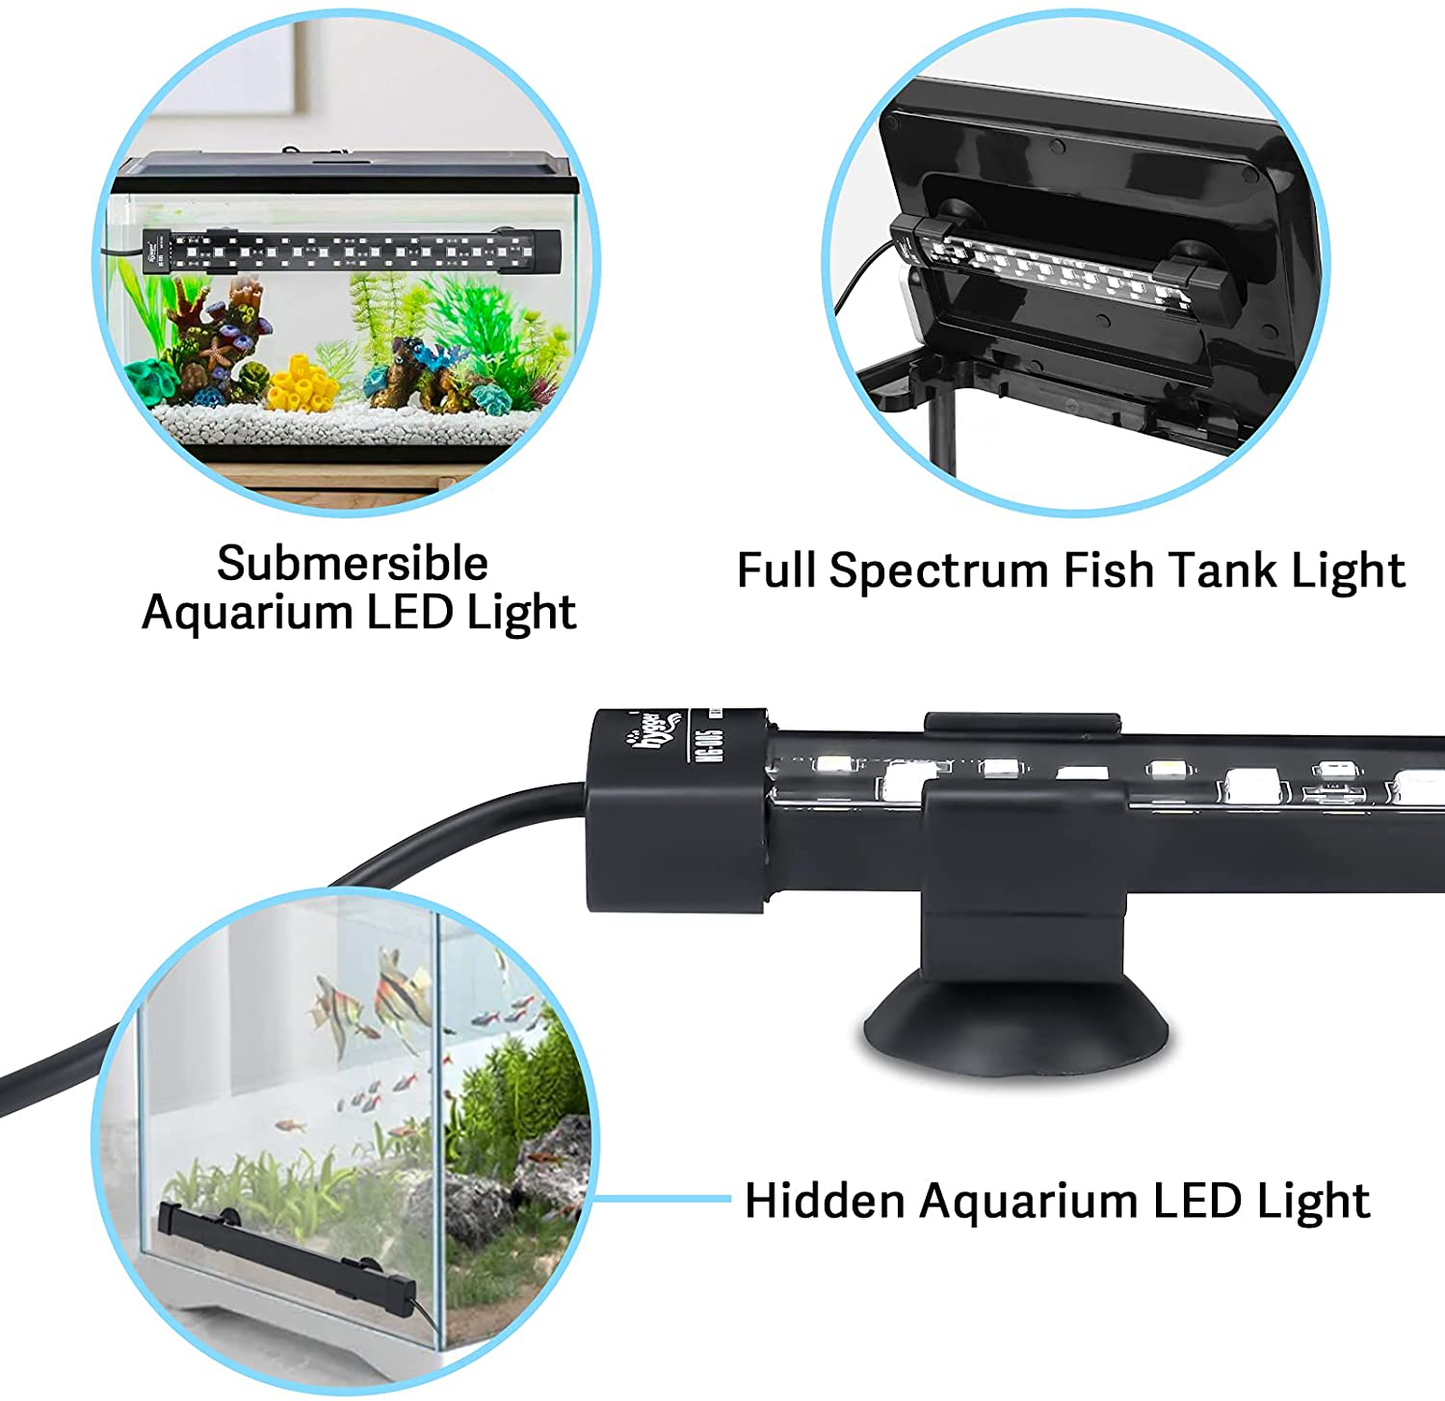 Hygger 24/7 Mode Submersible Aquarium LED Light, Full Spectrum Hidden Fish Tank Light with 3 Rows Beads 7 Colors Auto on off Sunrise-Daylight-Moonlight, Adjustable Timer Brightness 6W